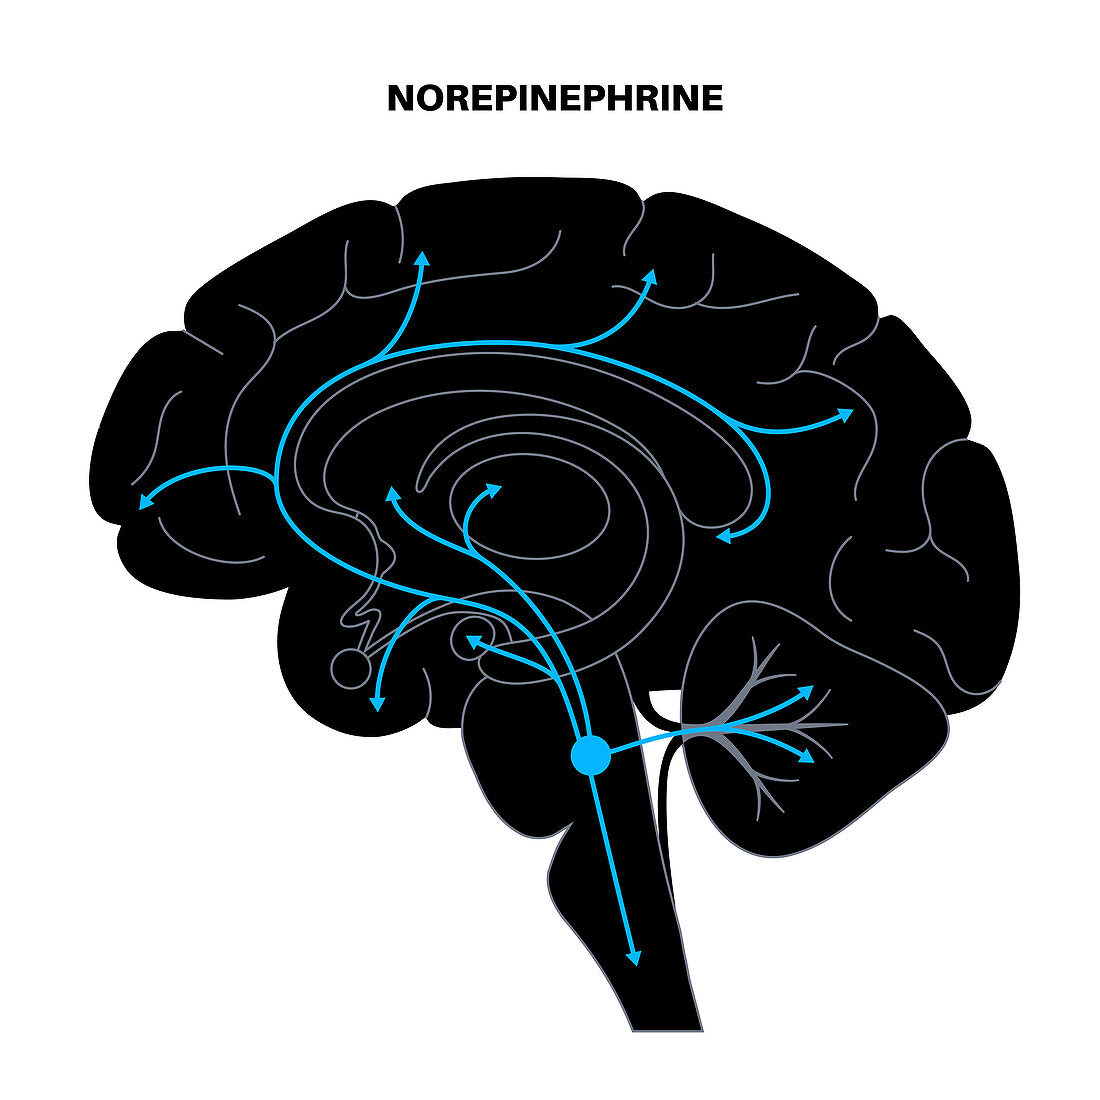 Norepinephrine hormone pathway, illustration